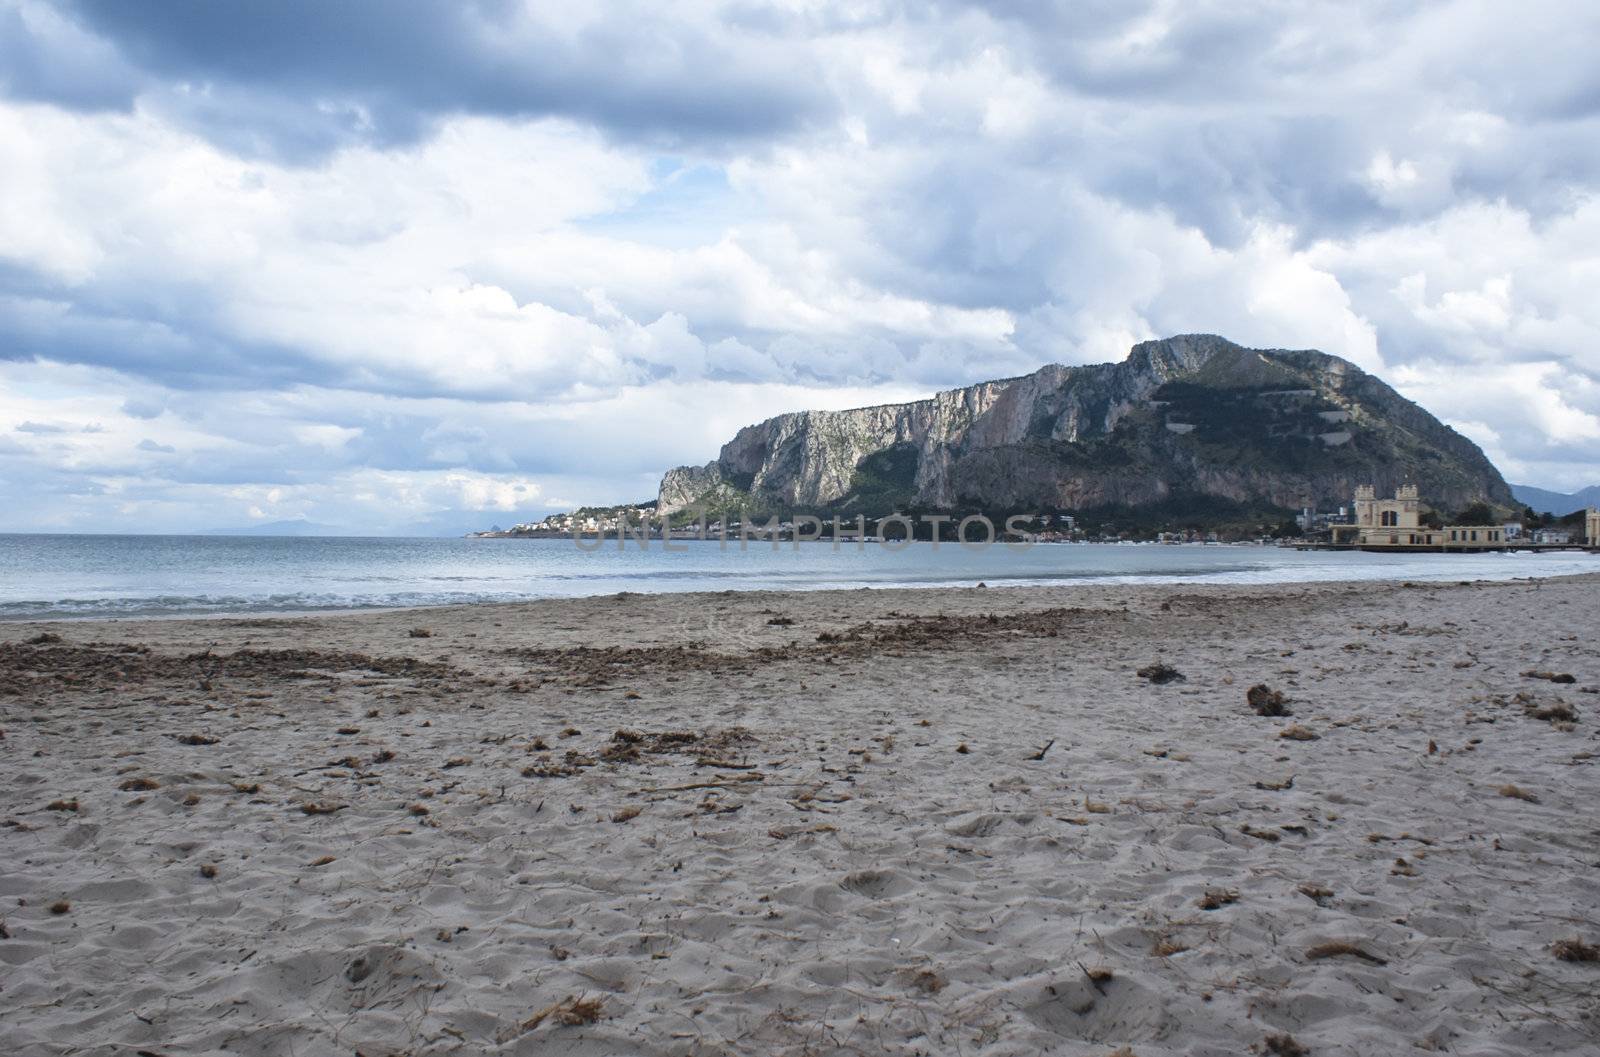 Beach of Mondello, Palermo, Sicily by gandolfocannatella